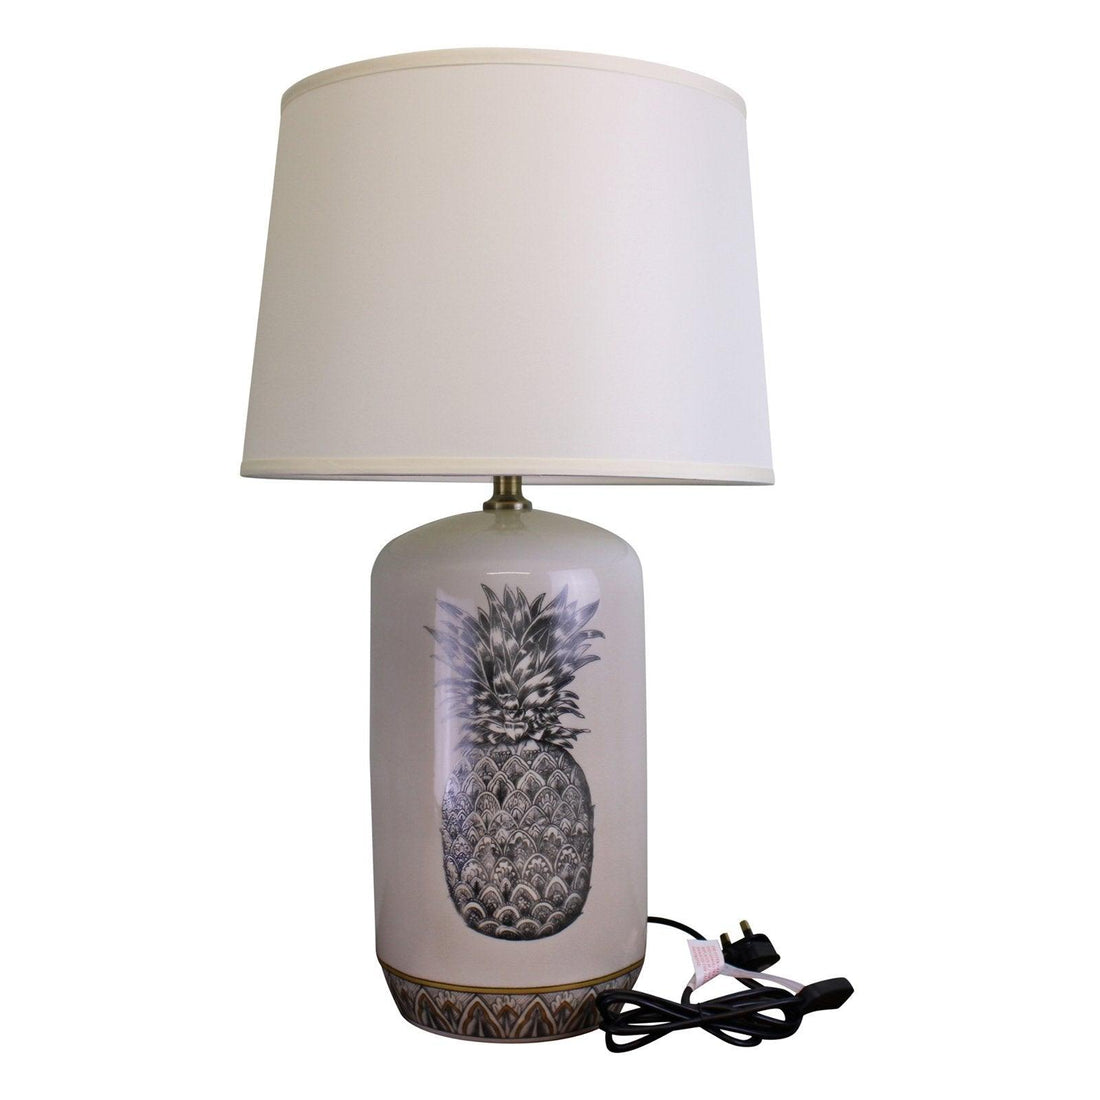 Black & White Ceramic Lamp with Pineapple Design 69cm - £76.99 - Table Lamps 